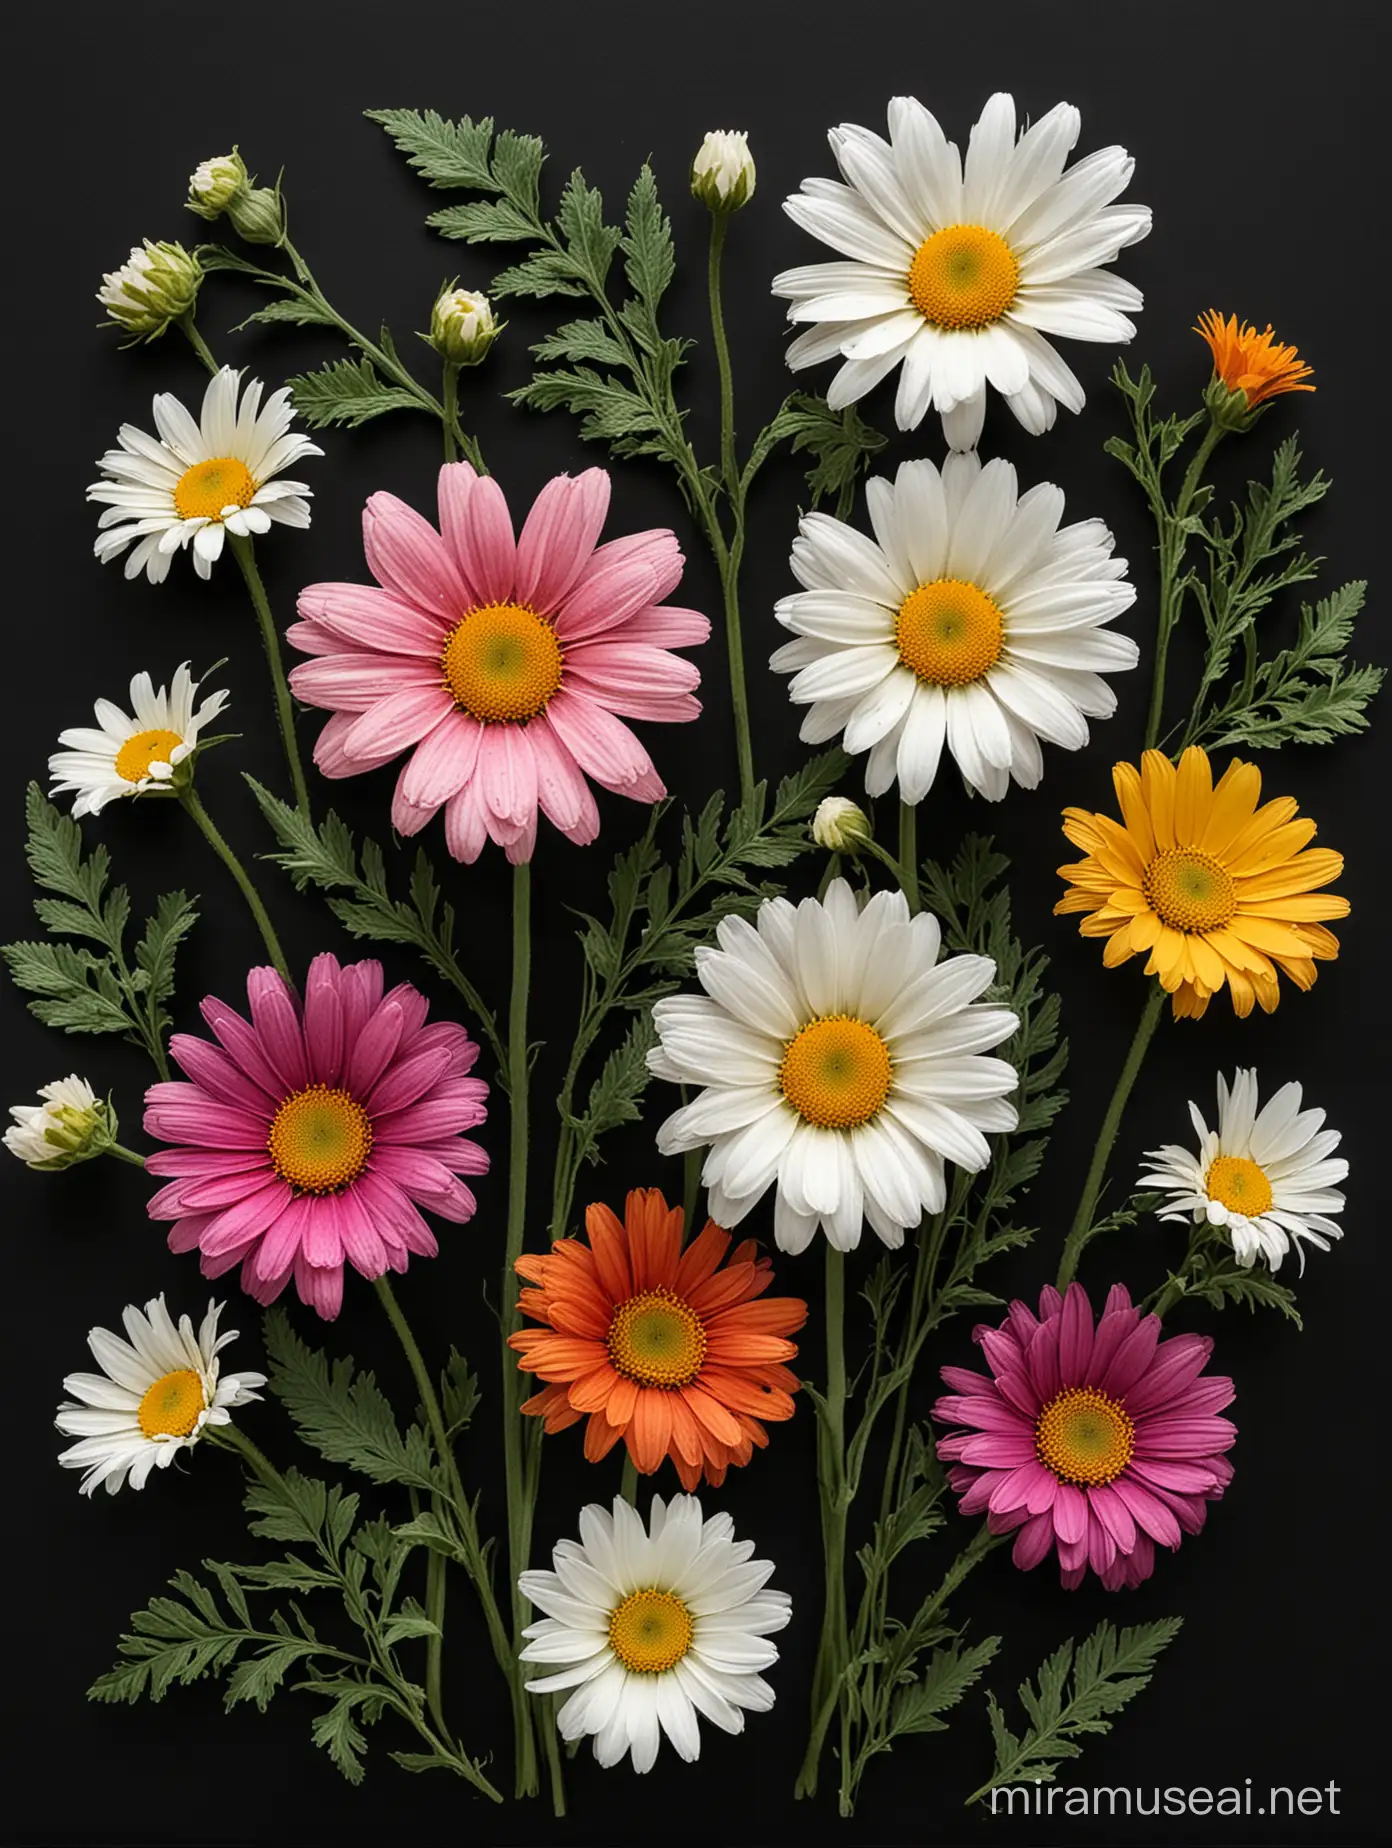 Vibrant MultiColored Daisy Blooms in Stylish Botanical Decor on Black Background